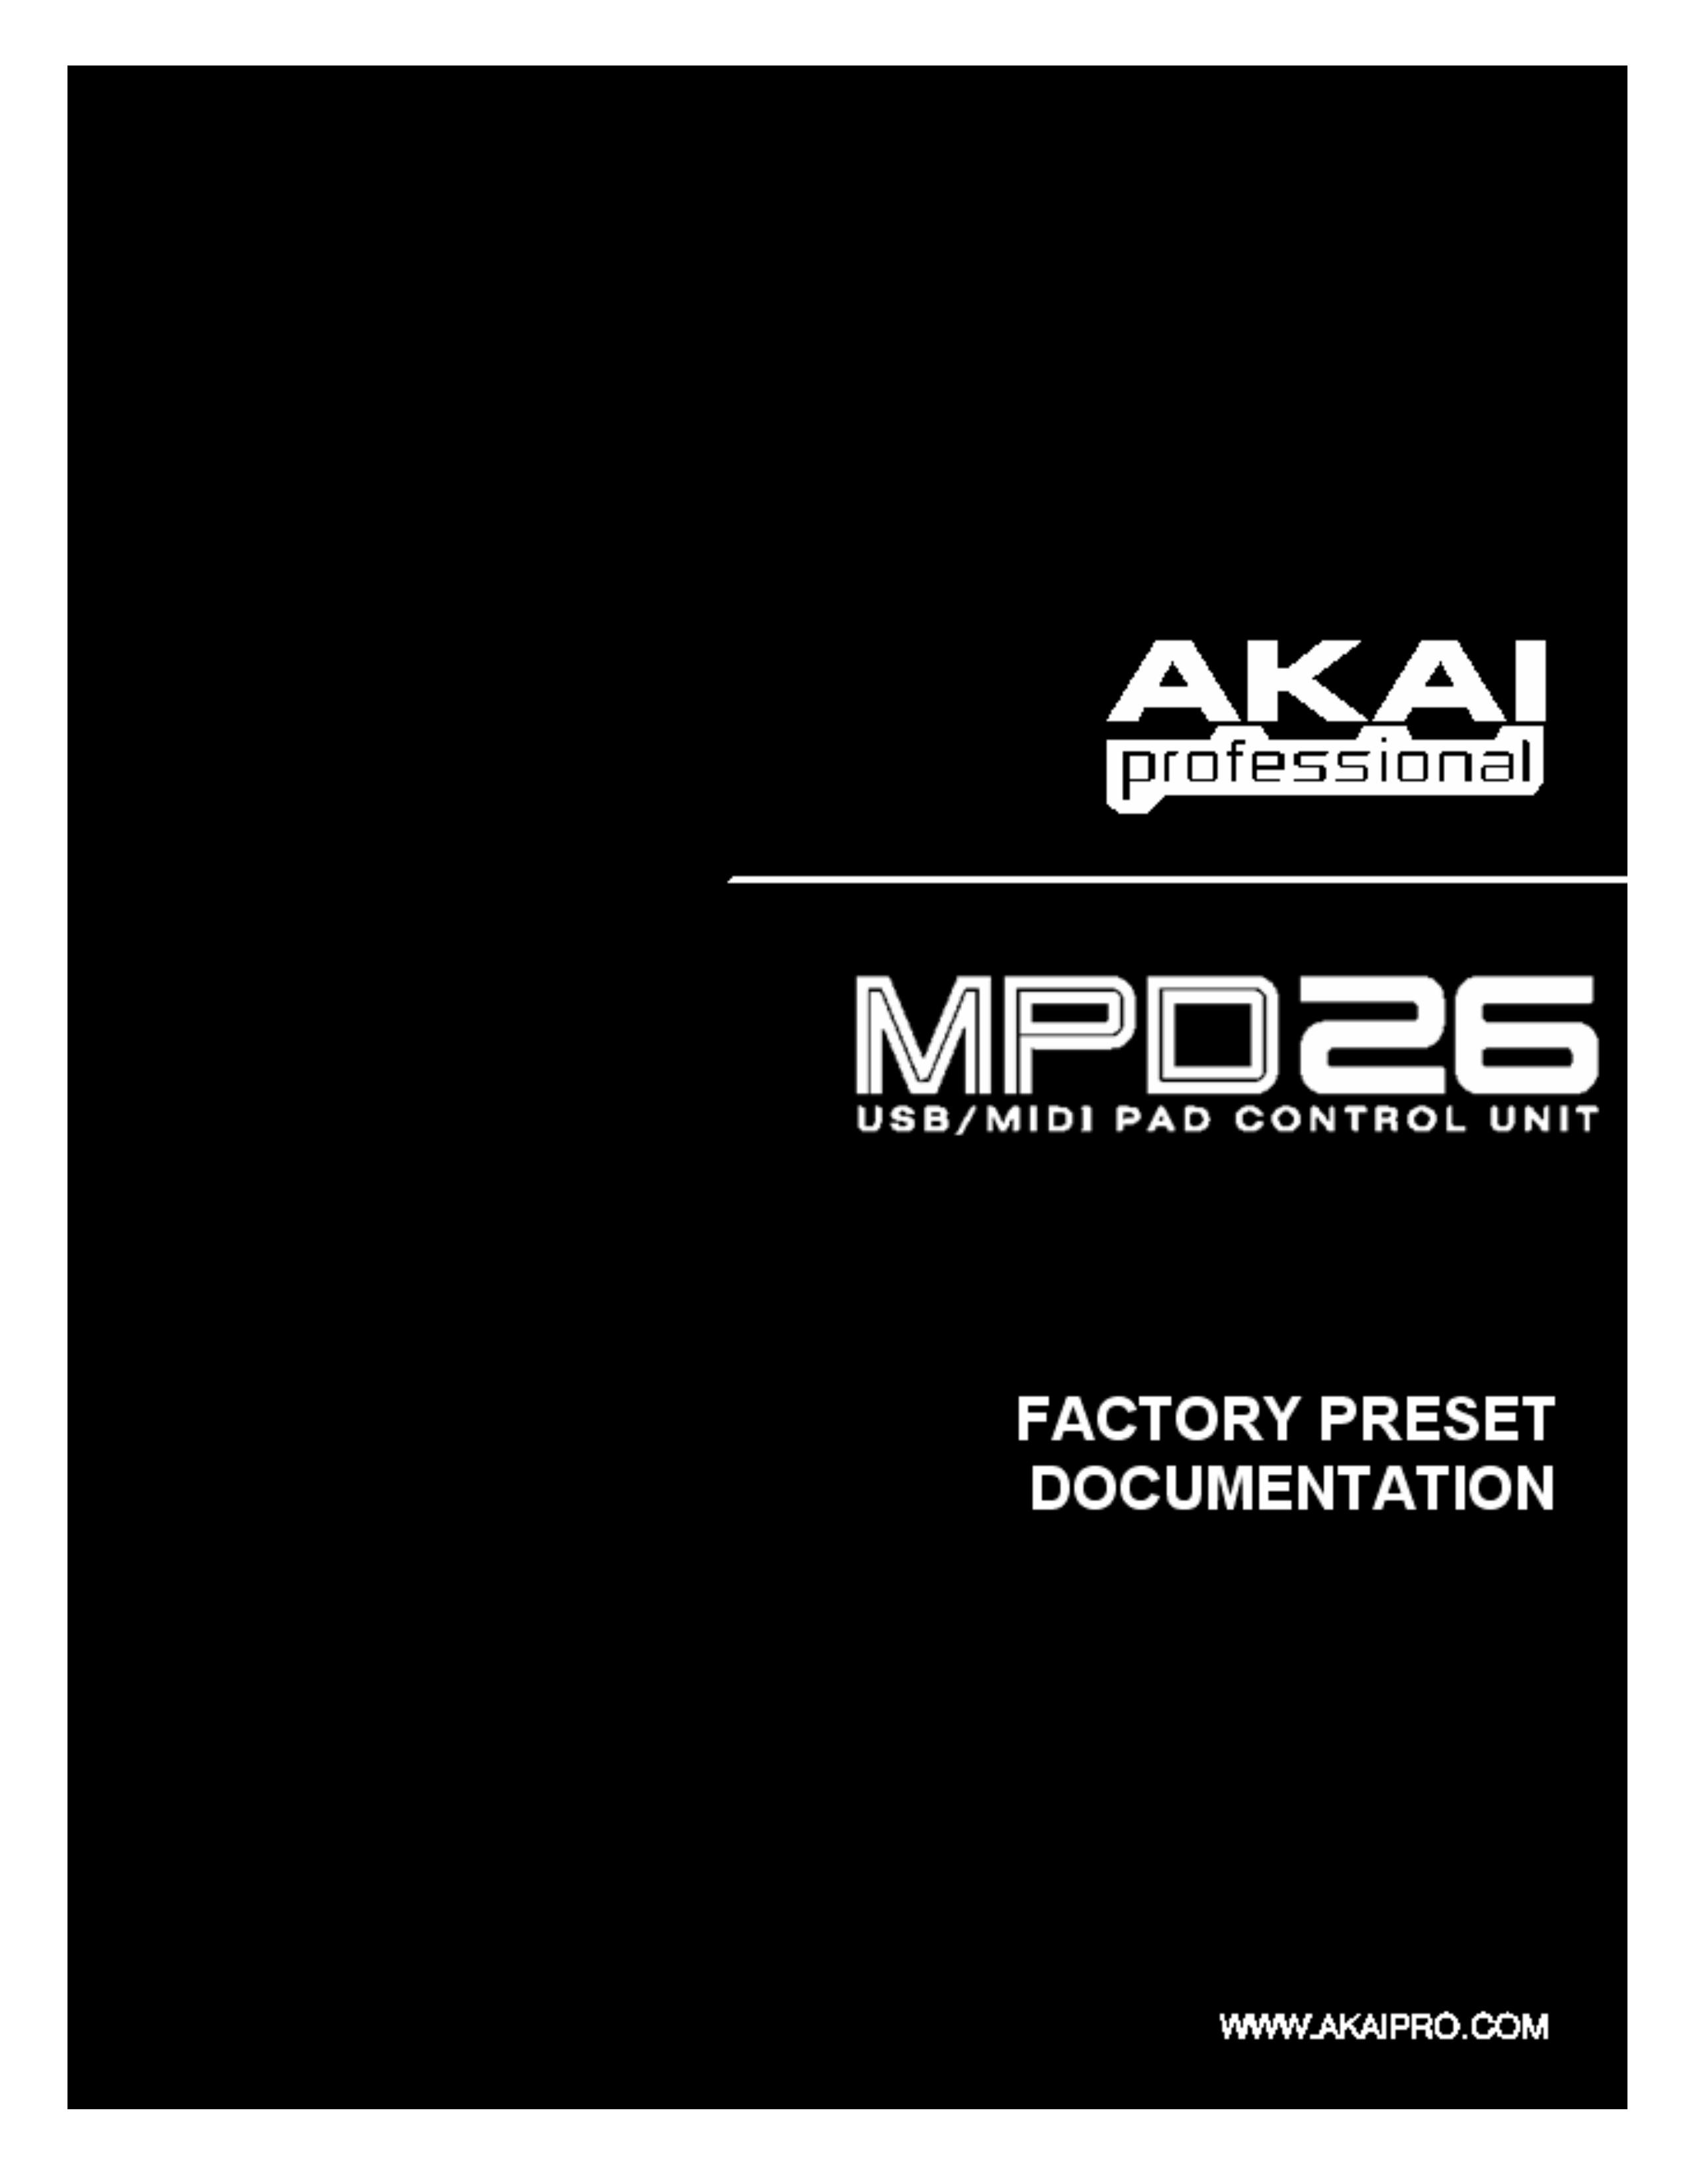 Akai MPD26 Oxygen Equipment User Manual (Page 1)